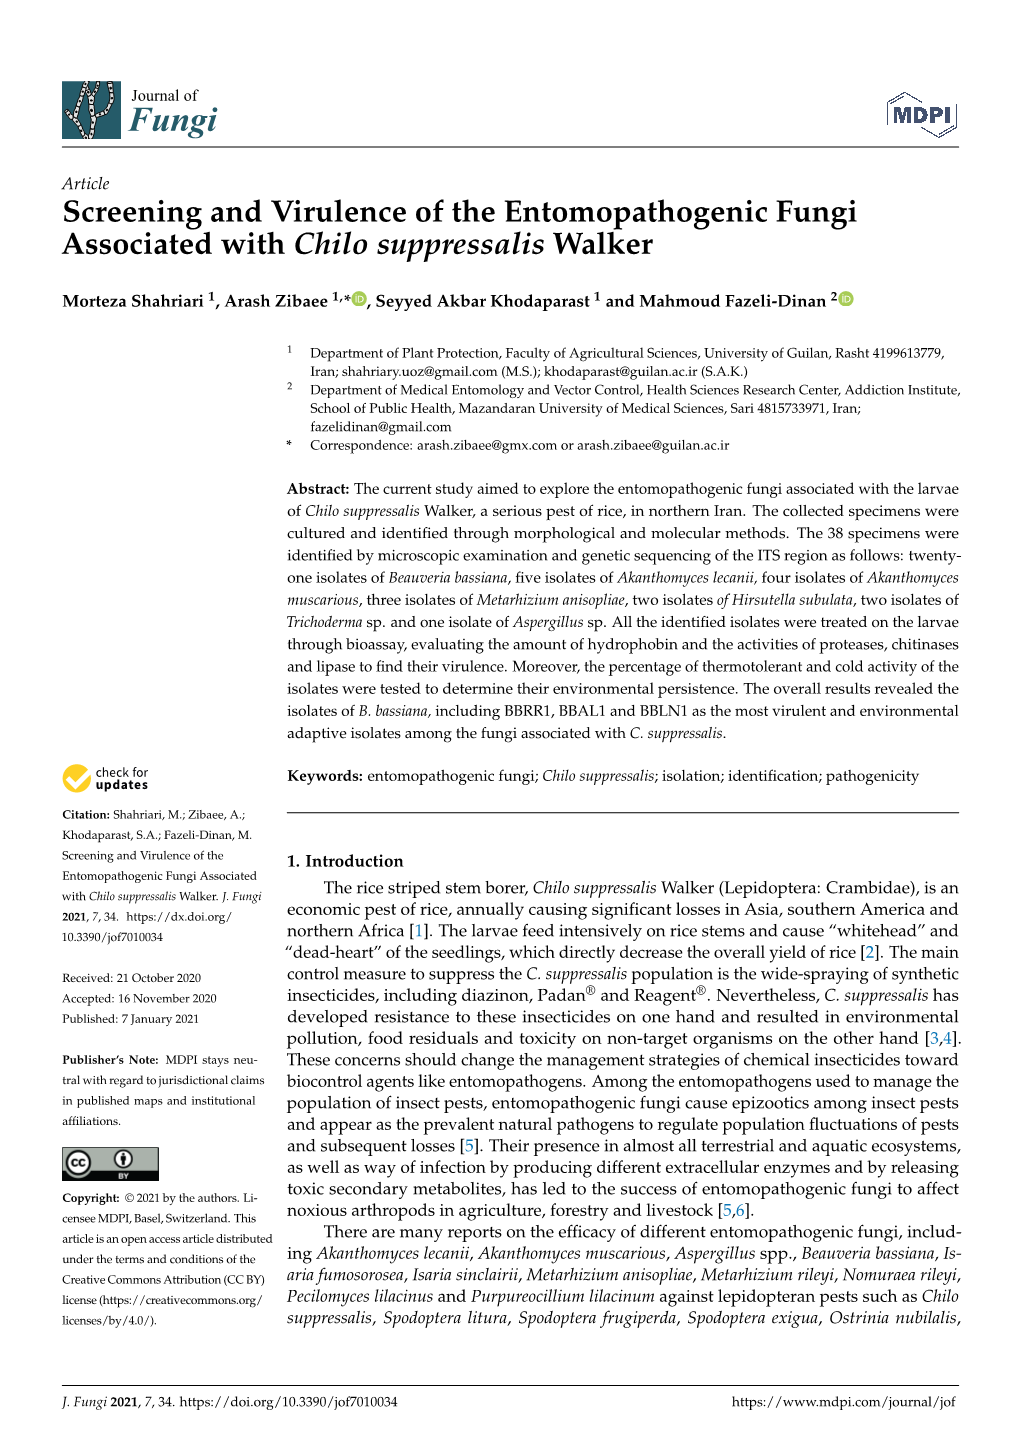 Screening and Virulence of the Entomopathogenic Fungi Associated with Chilo Suppressalis Walker